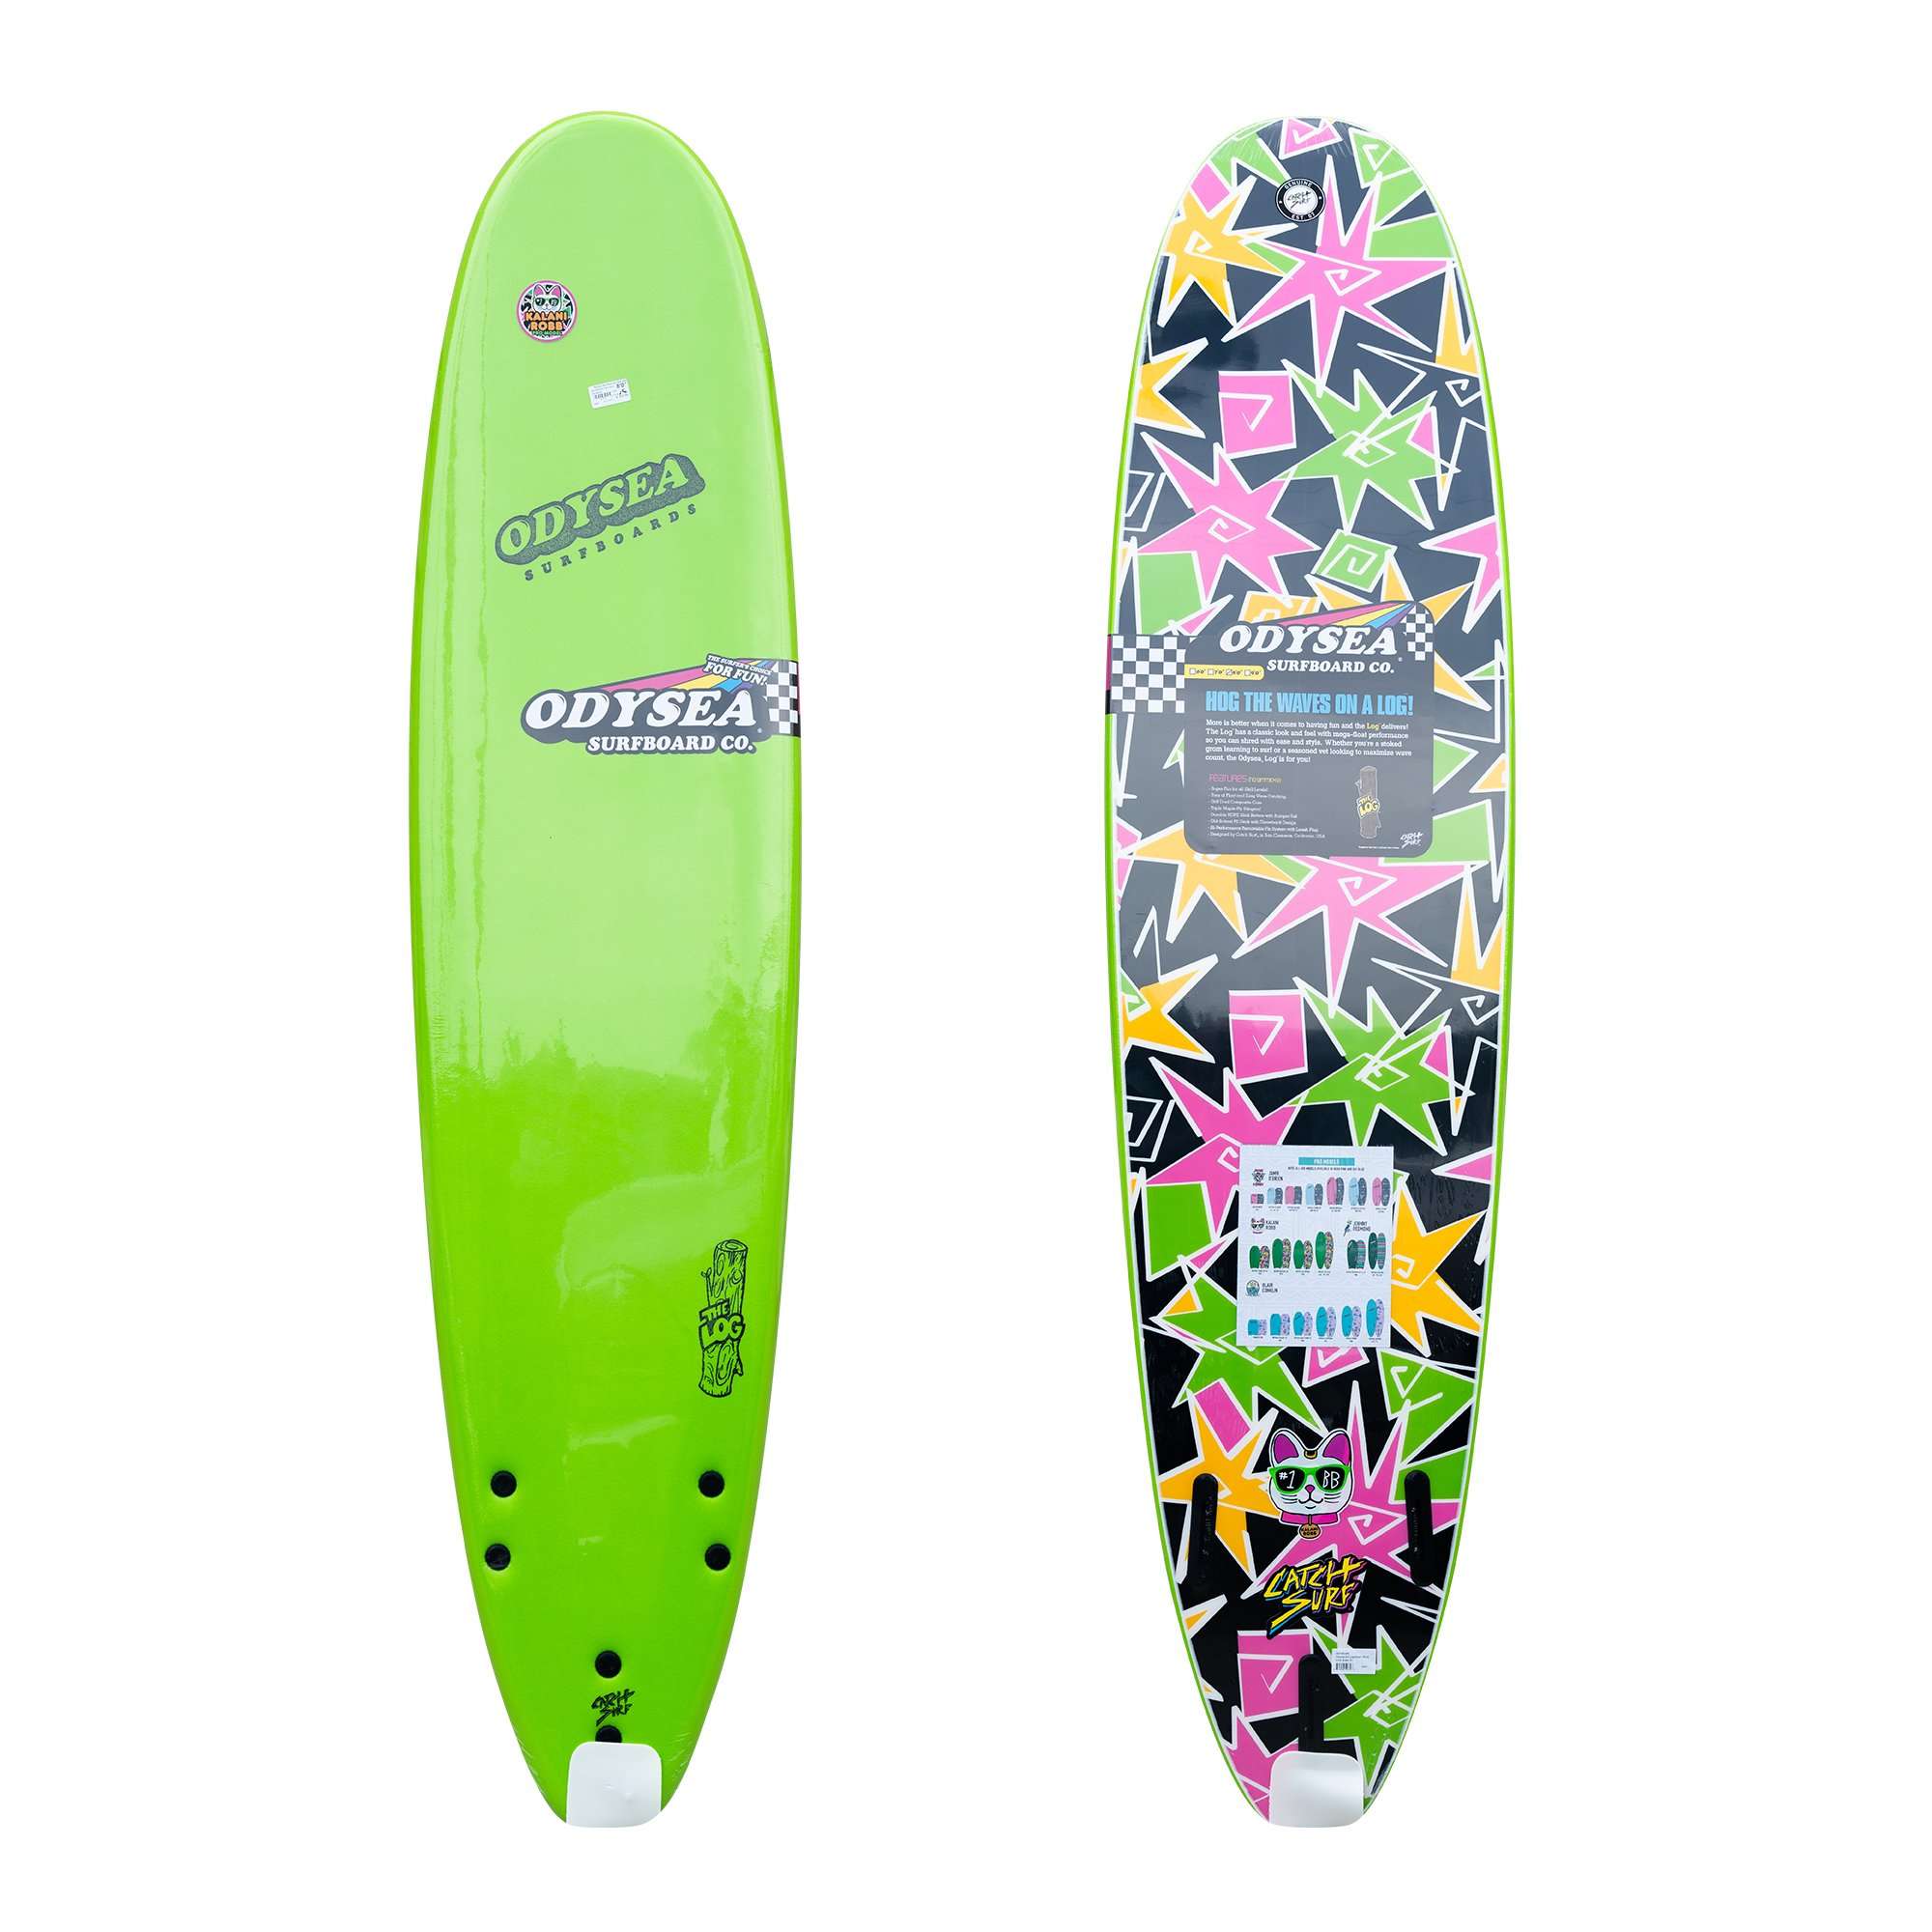 Odysea Soft Top Surfboards